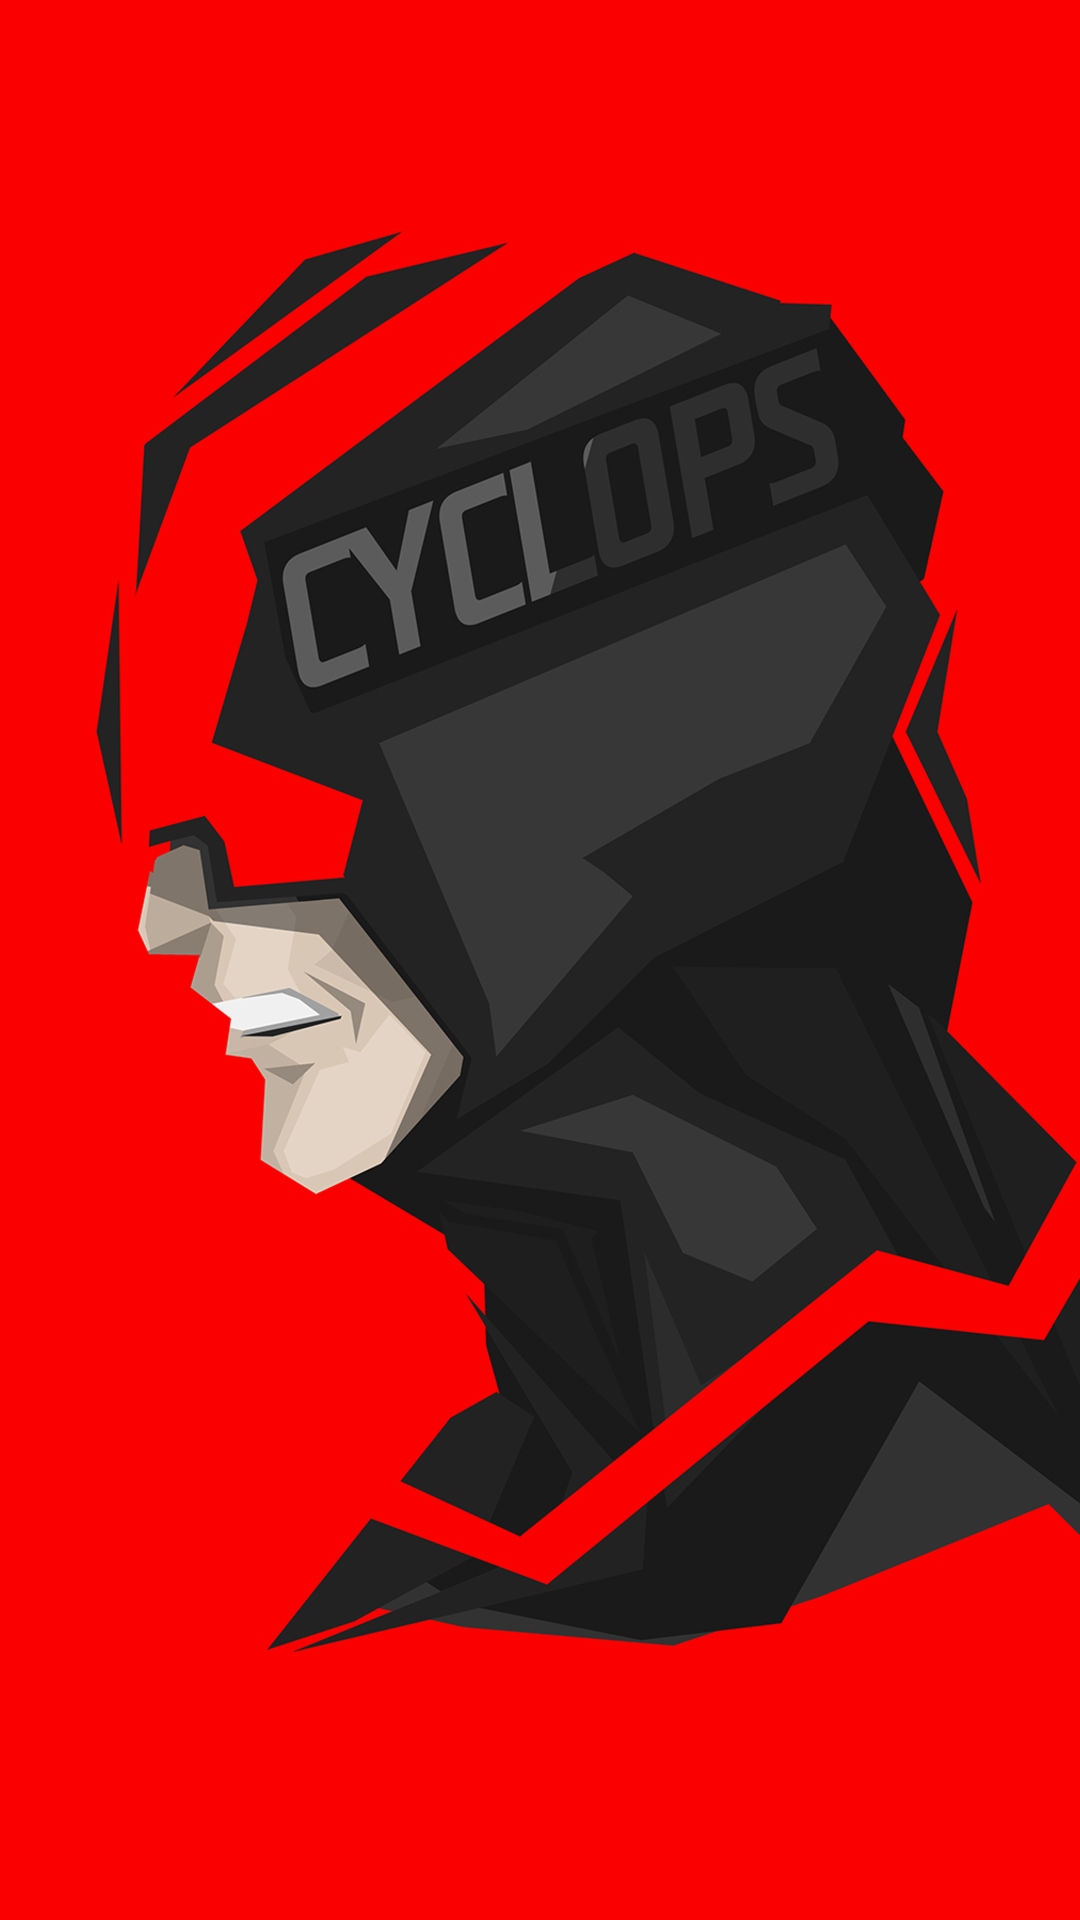 Cyclops Phone Wallpaper by BossLogic